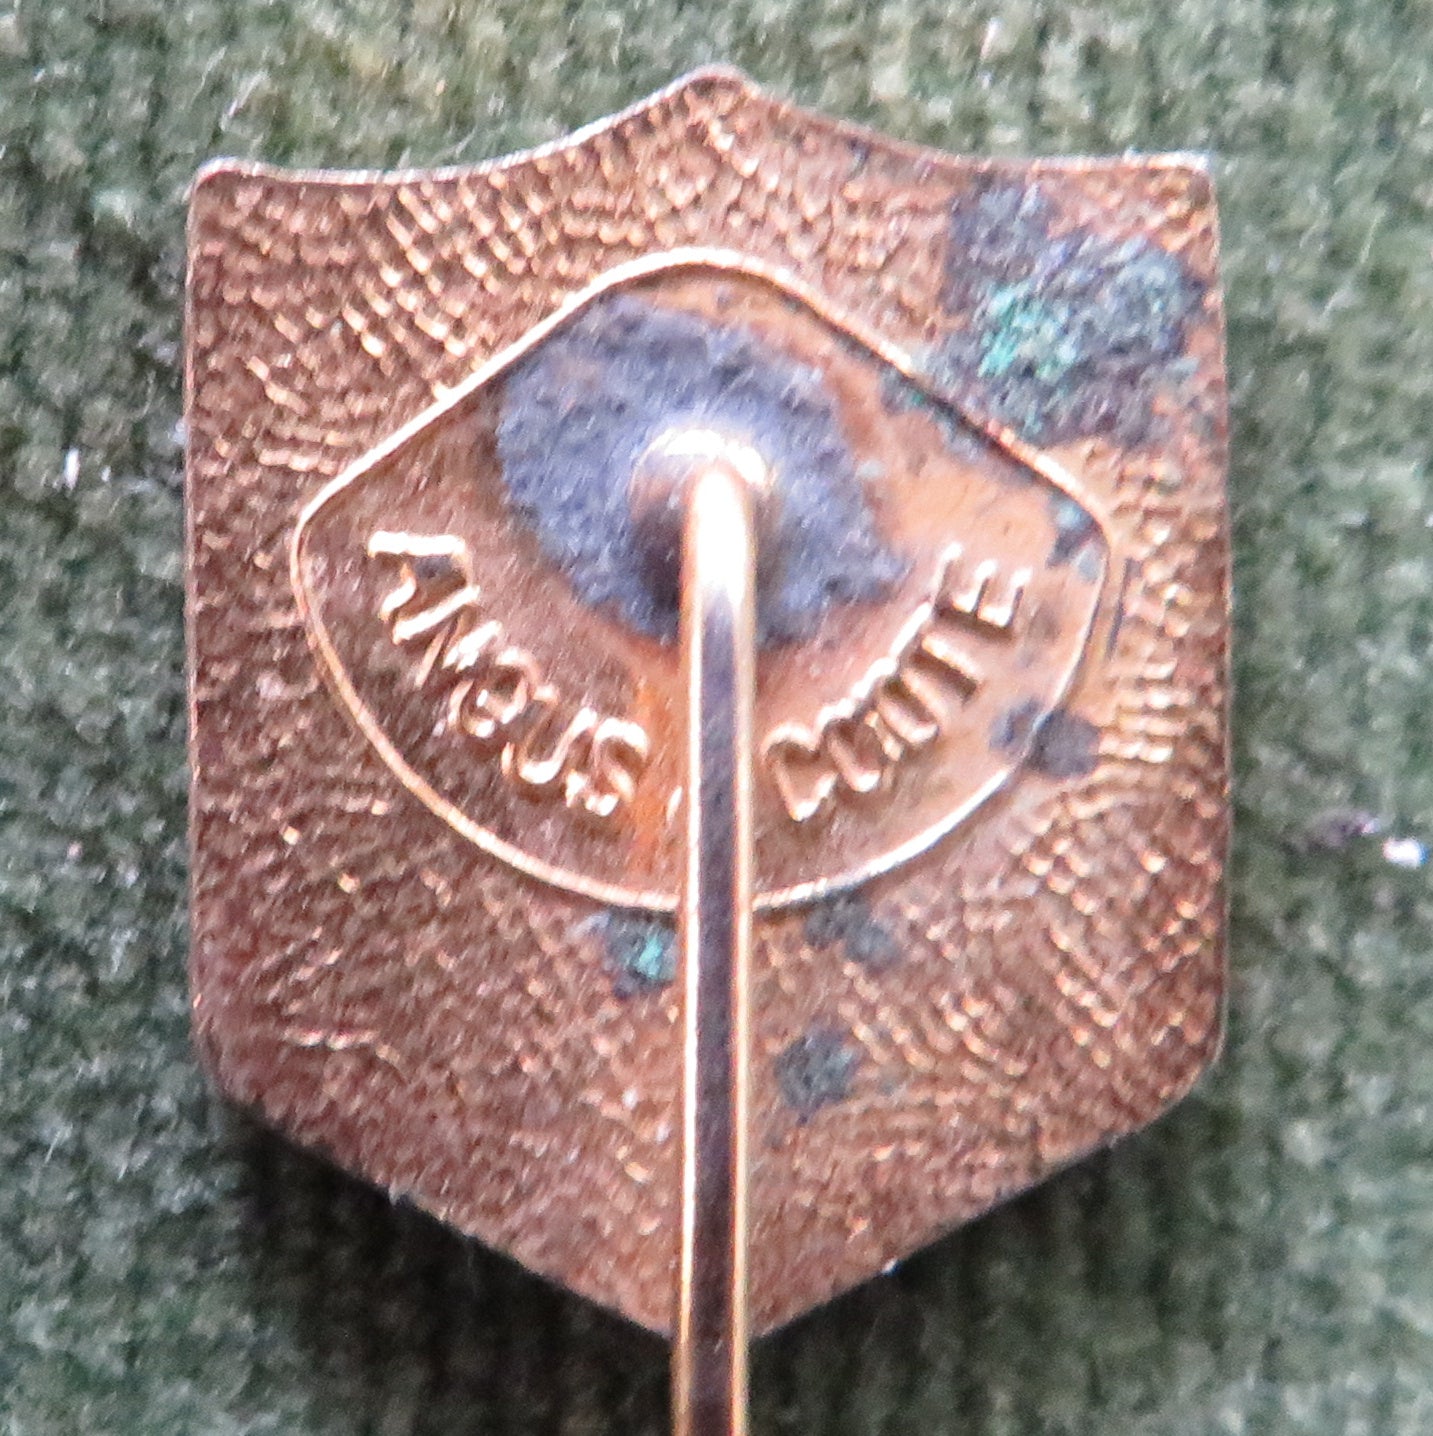 Q.U.R.L.F.C. Enameled Lapel Pin By Angus & Coote